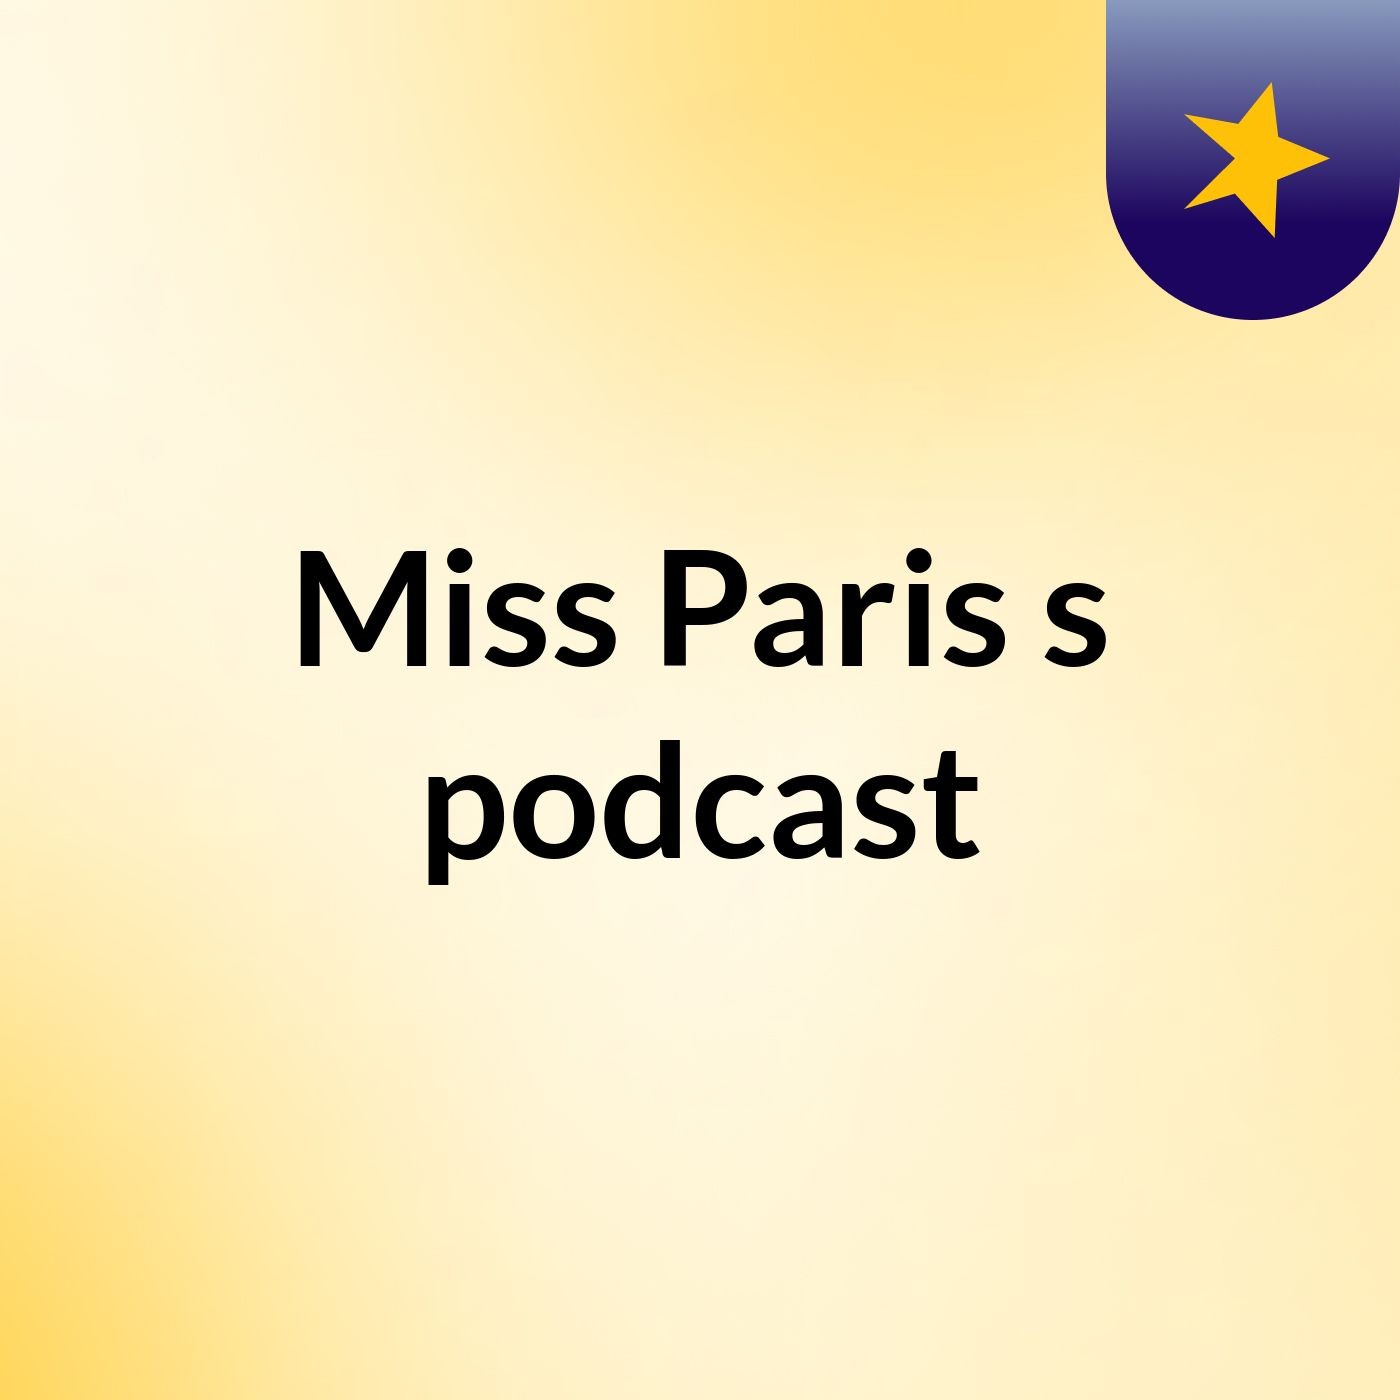 Miss Paris's podcast